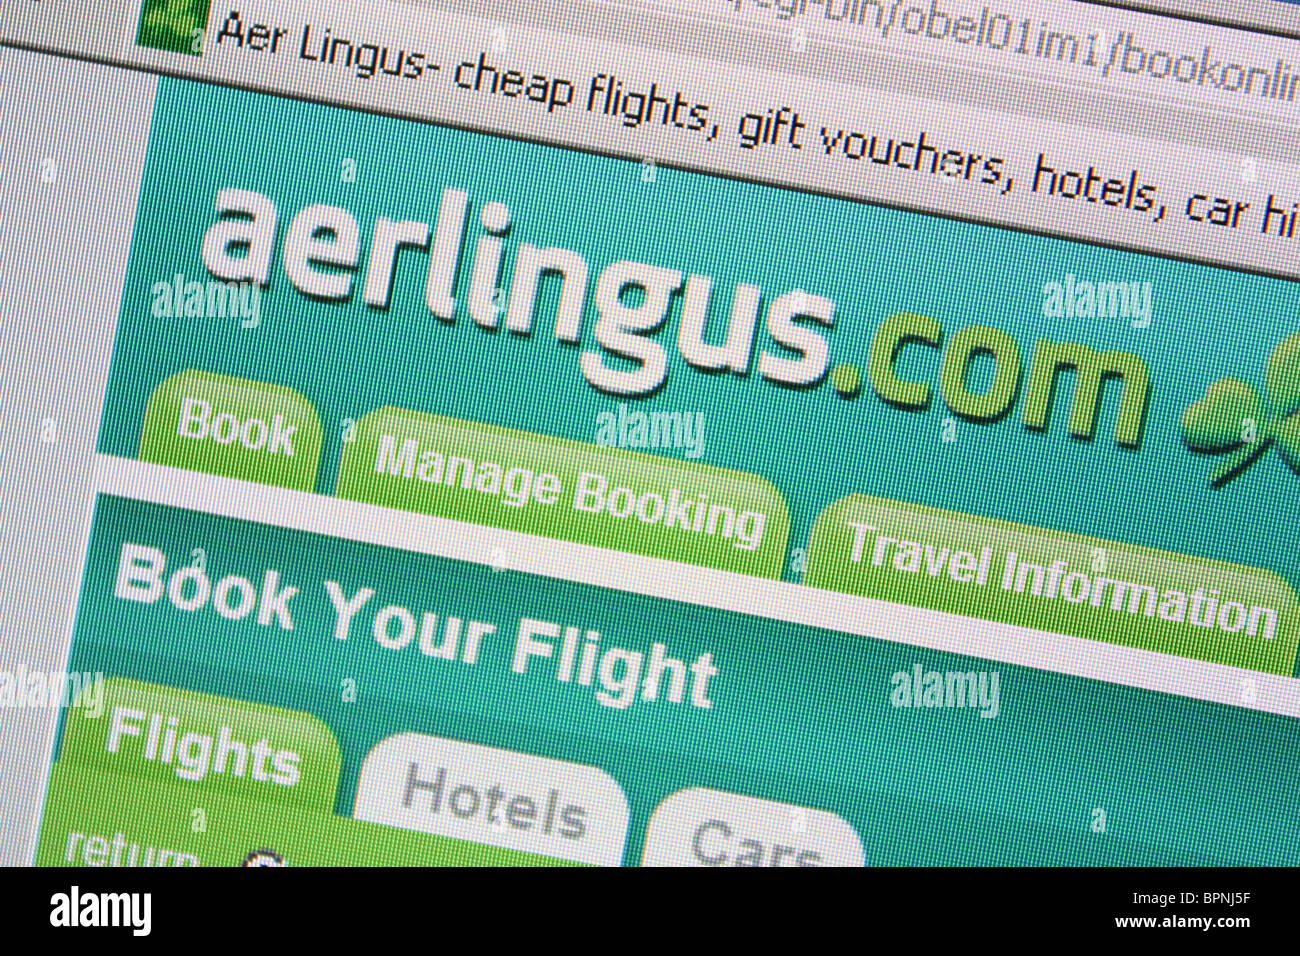 aerlingus cheap budget flight travel Stock Photo